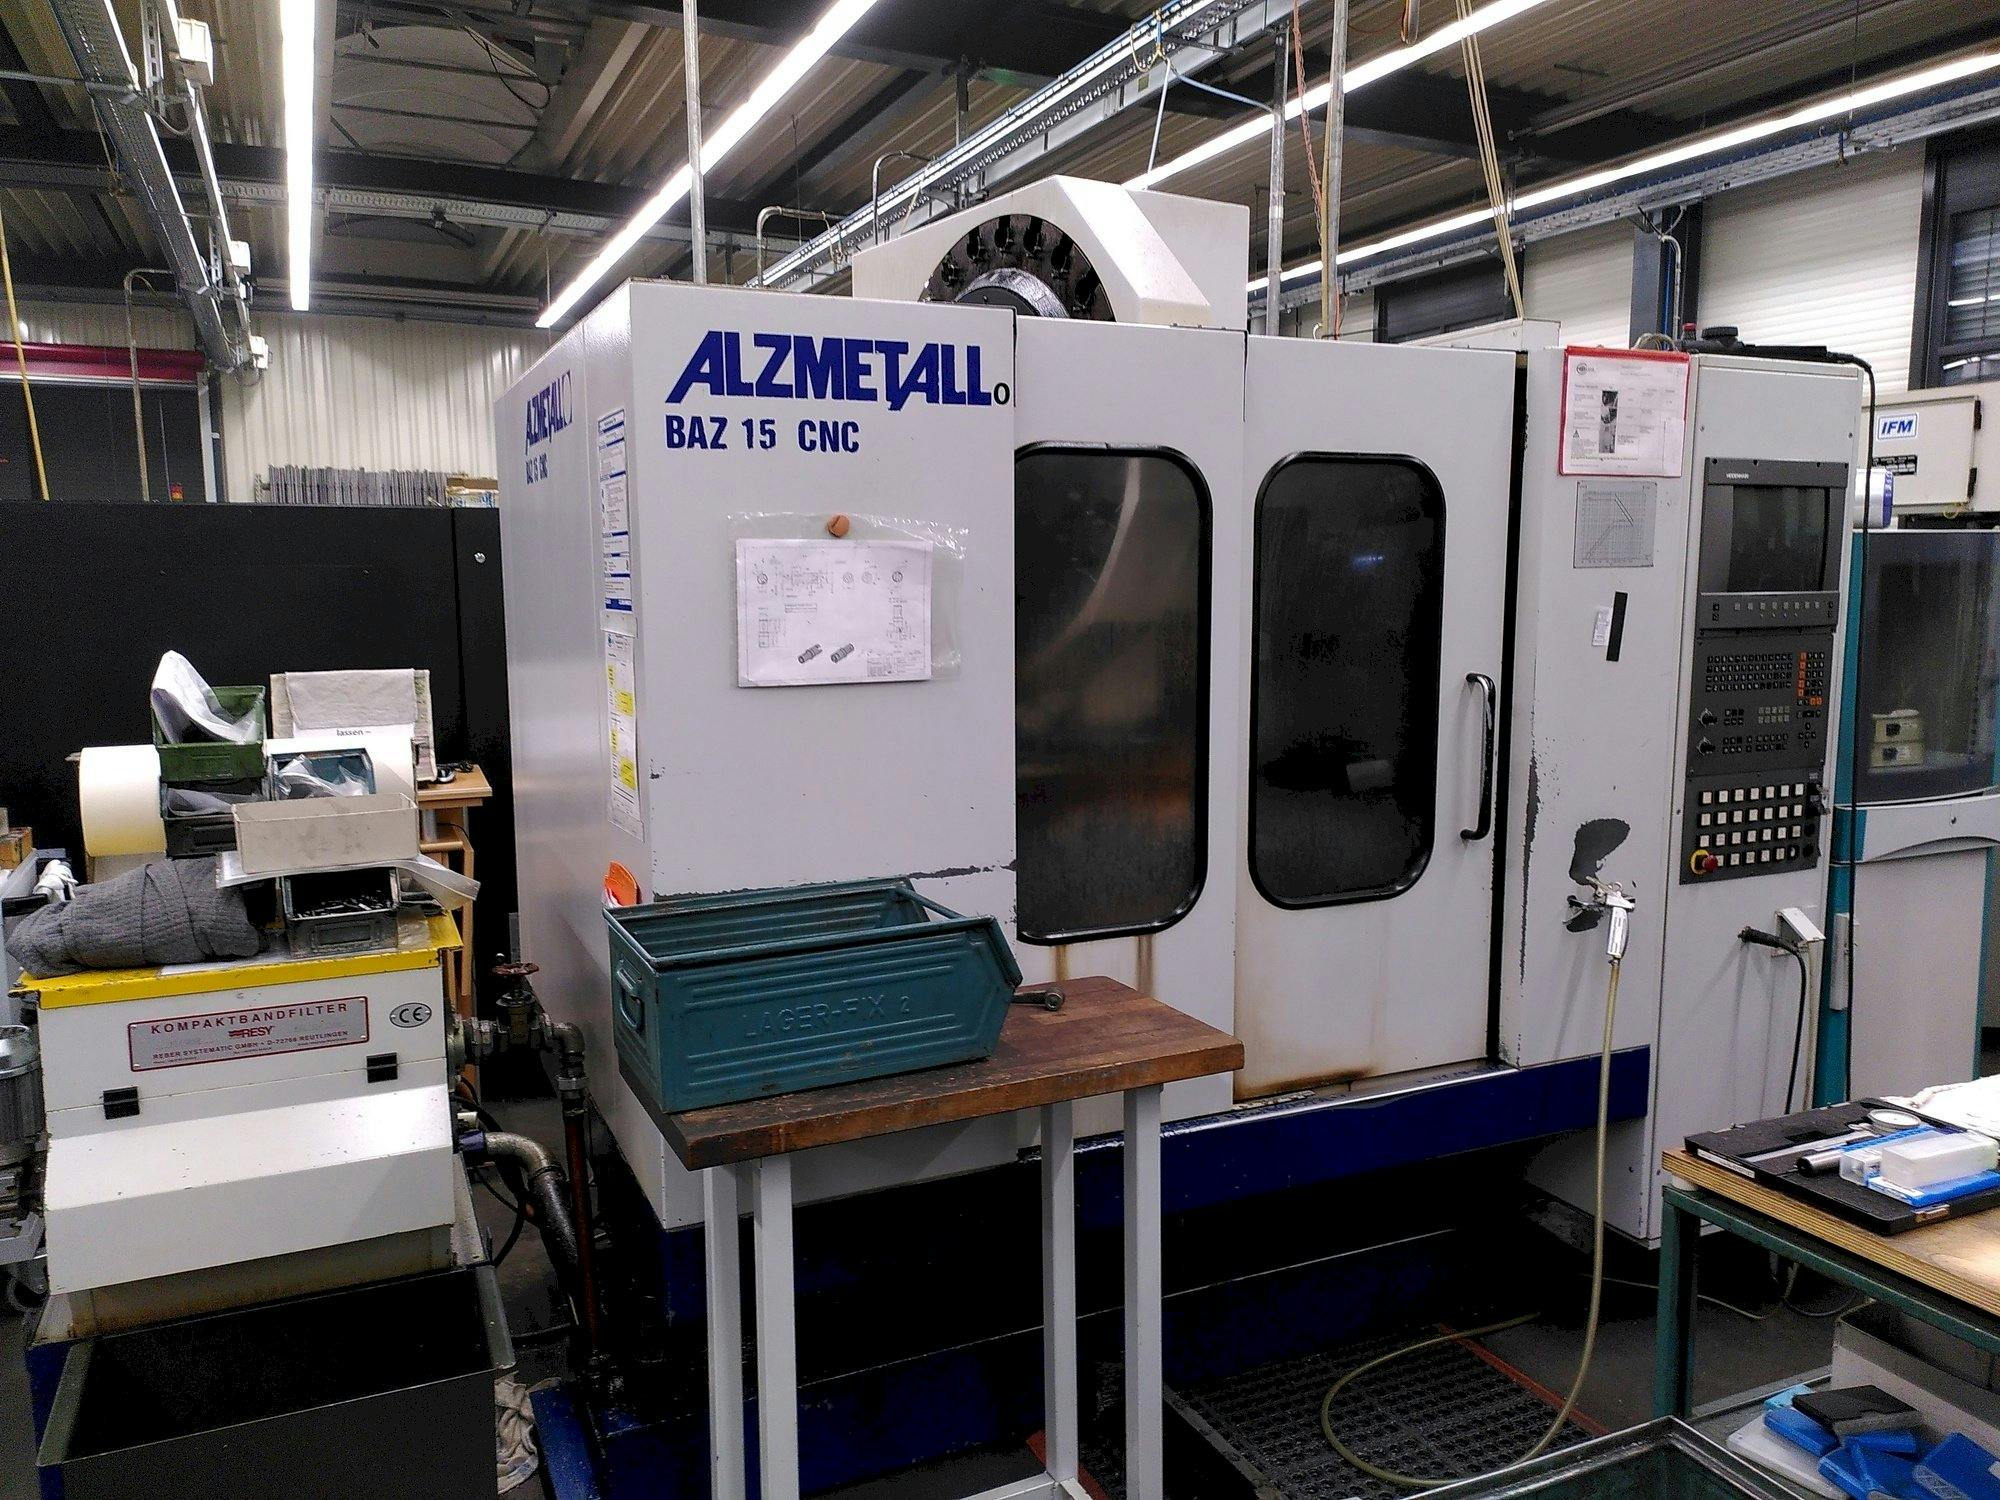 Prikaz  stroja Alzmetall BAZ 15 CNC  sprijeda